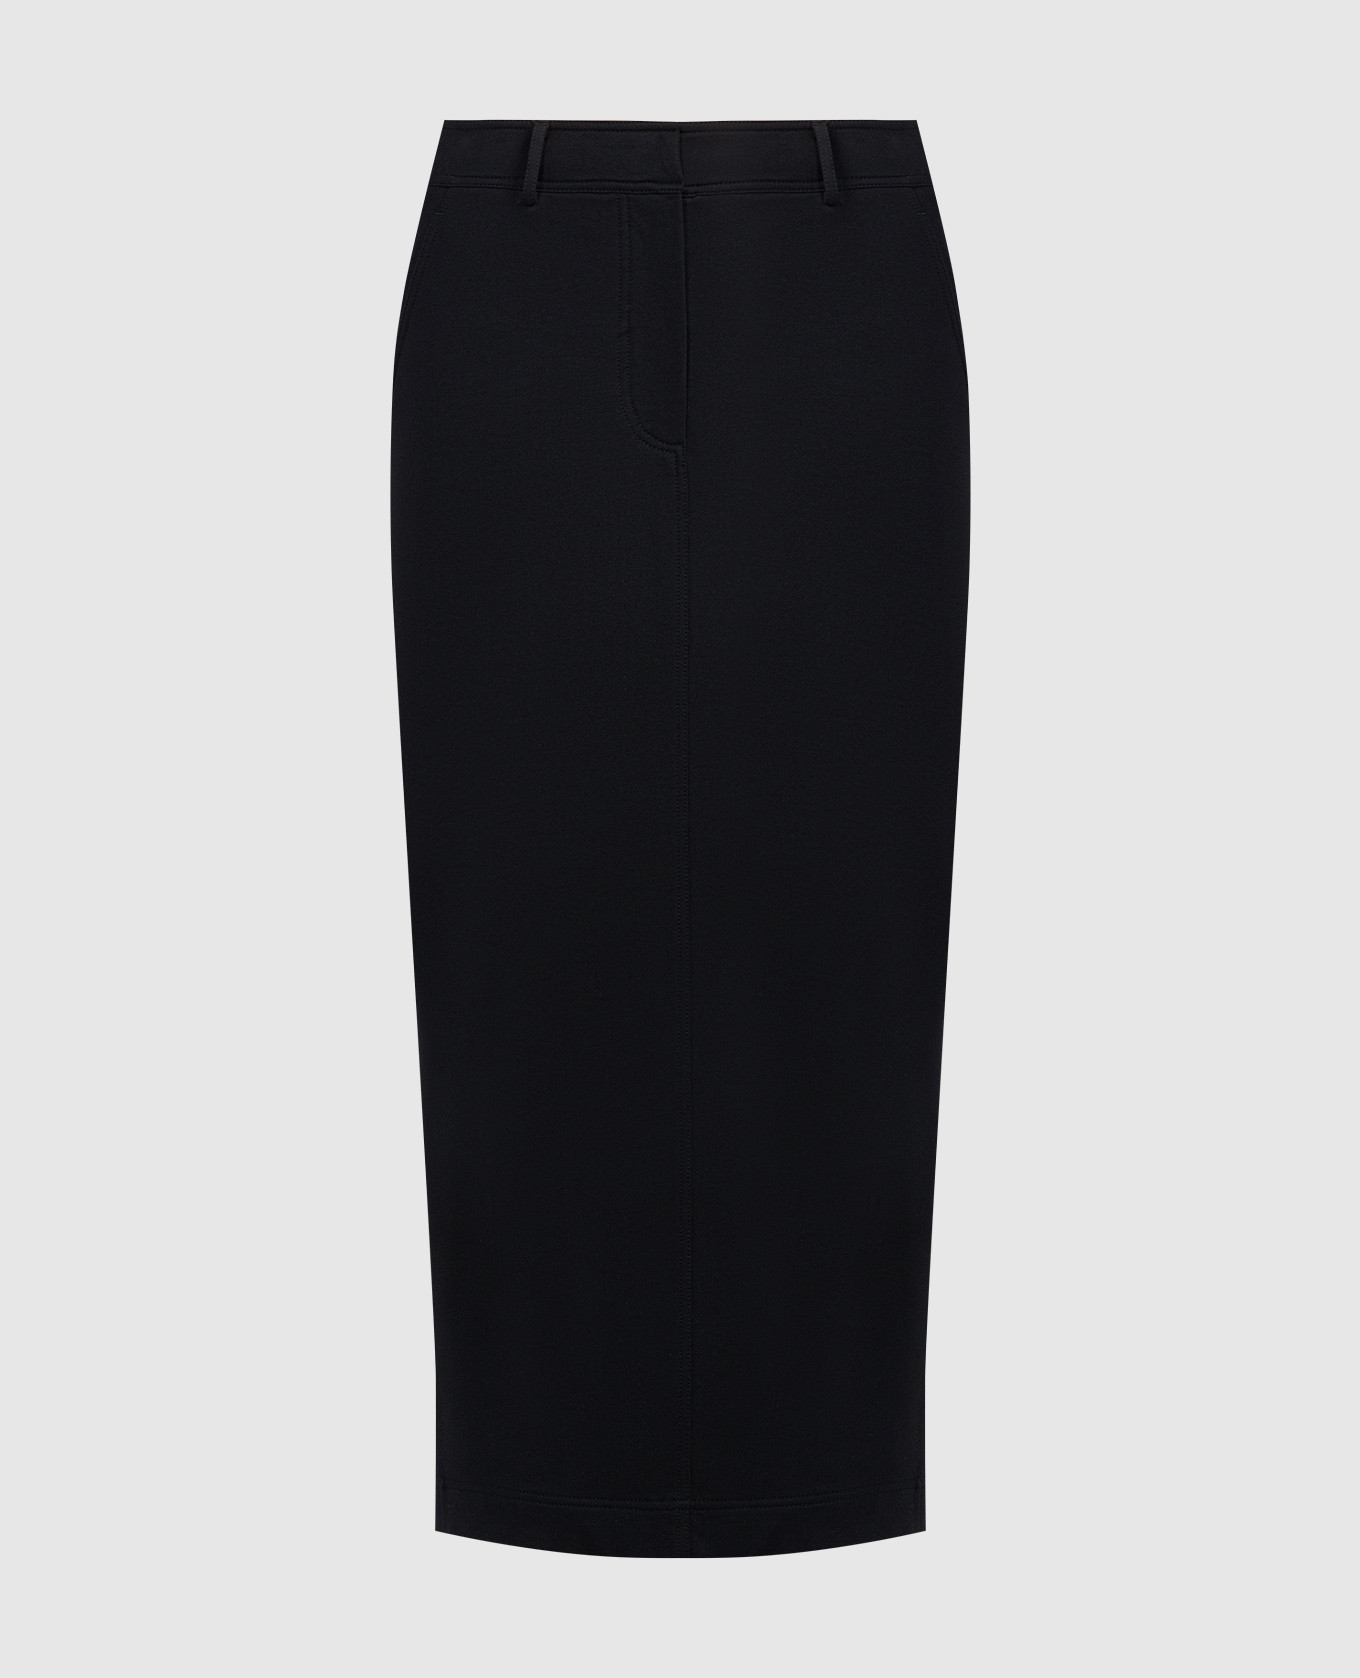 Black skirt with monil chain